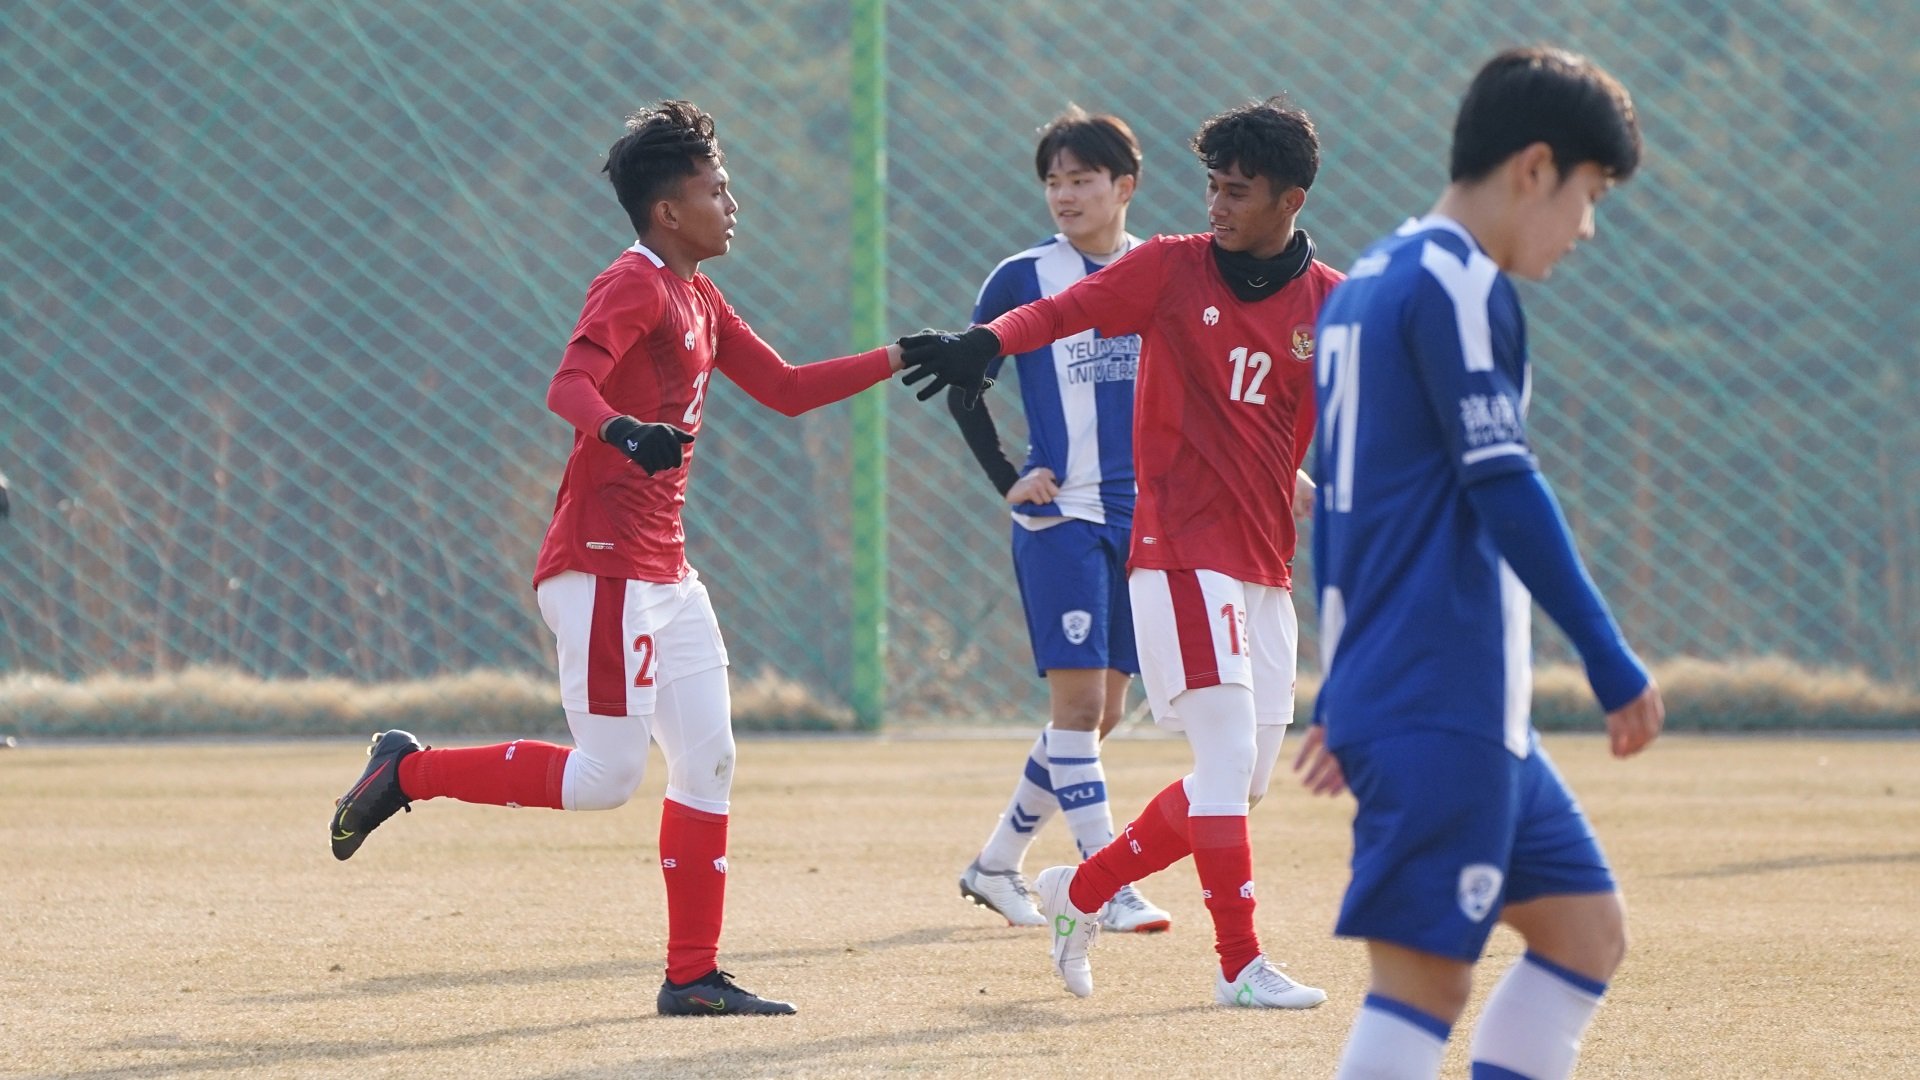 Timnas U-19 Kalah Telak di Korea Selatan, Faktor Cuaca Jadi Alasannya